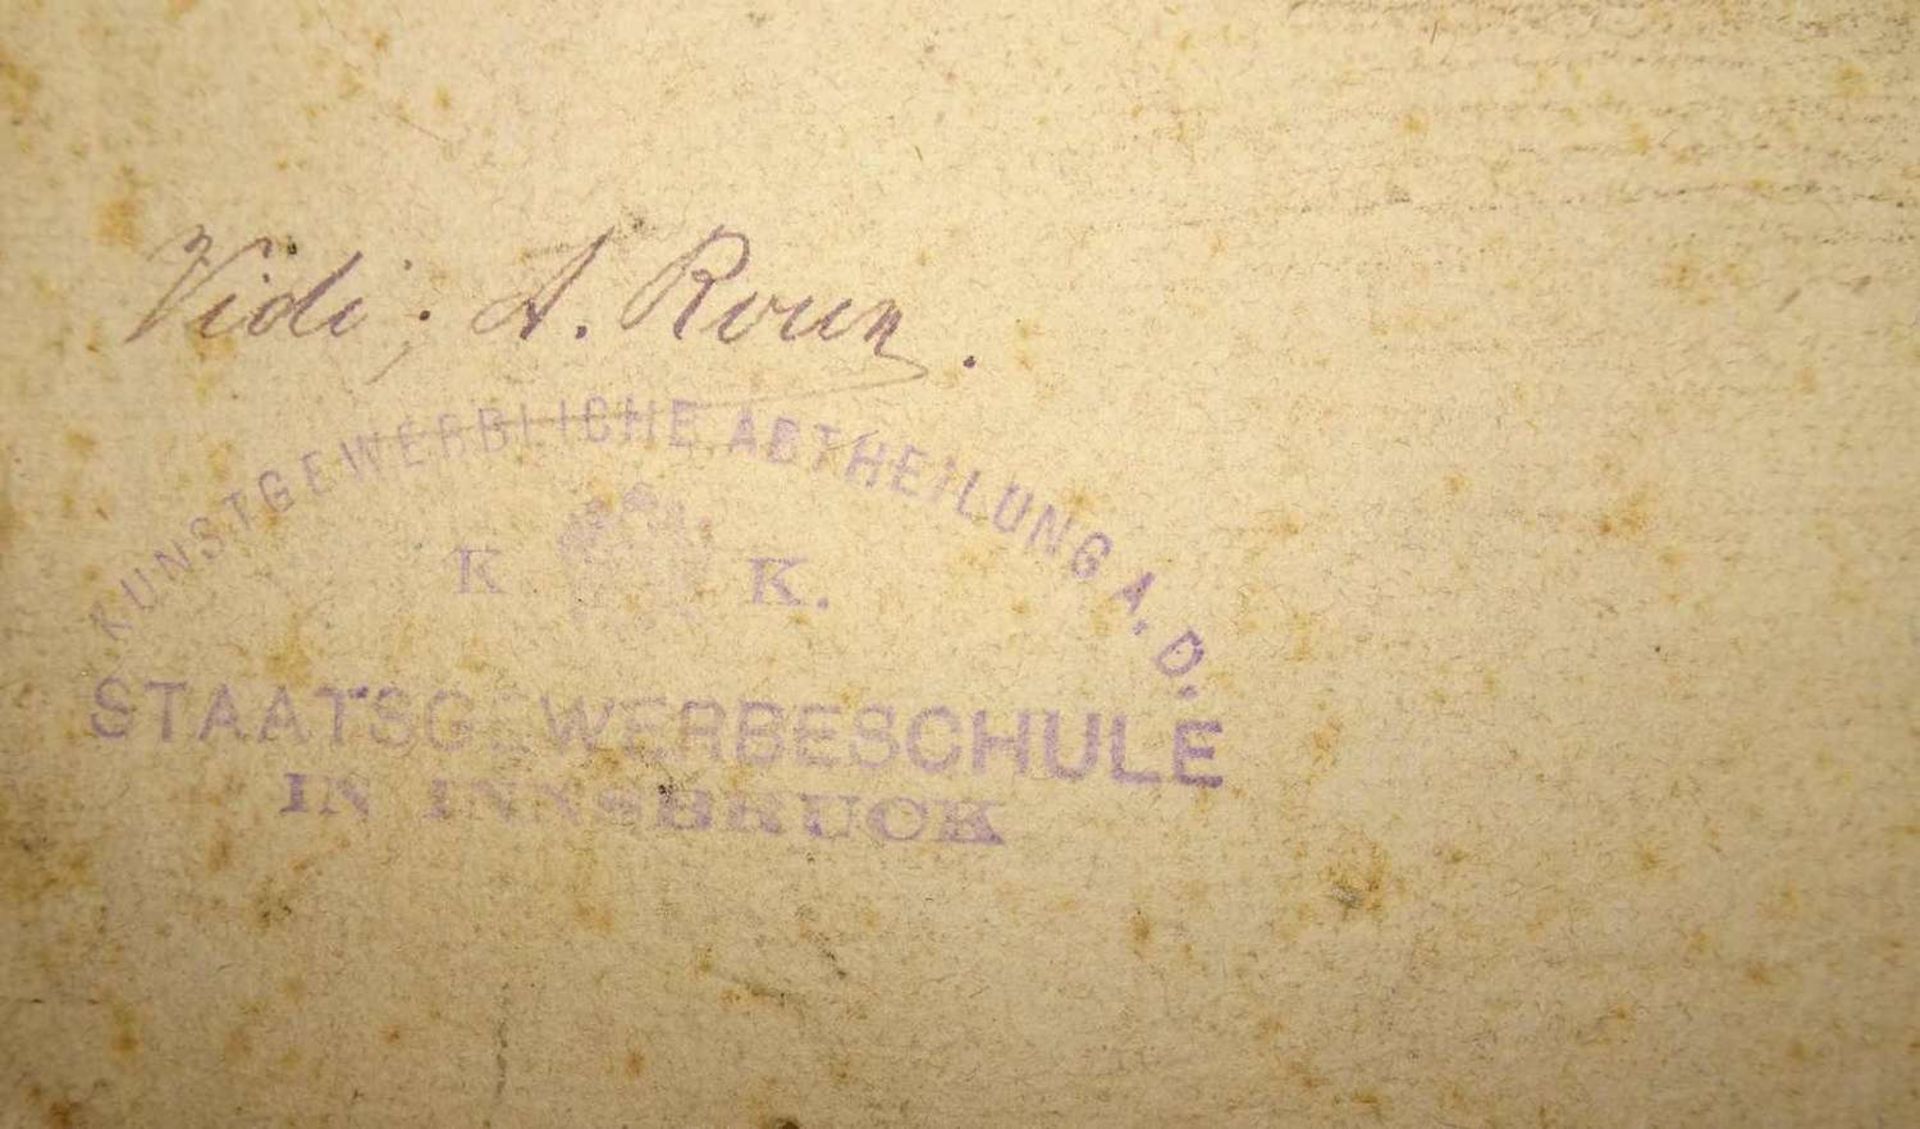 Hermann Wisiol, Bleistiftzeichnung "Engel", stockfleckig. Maße: Höhe ca. 29 cm, Breite ca. 44 cm. - Image 2 of 3